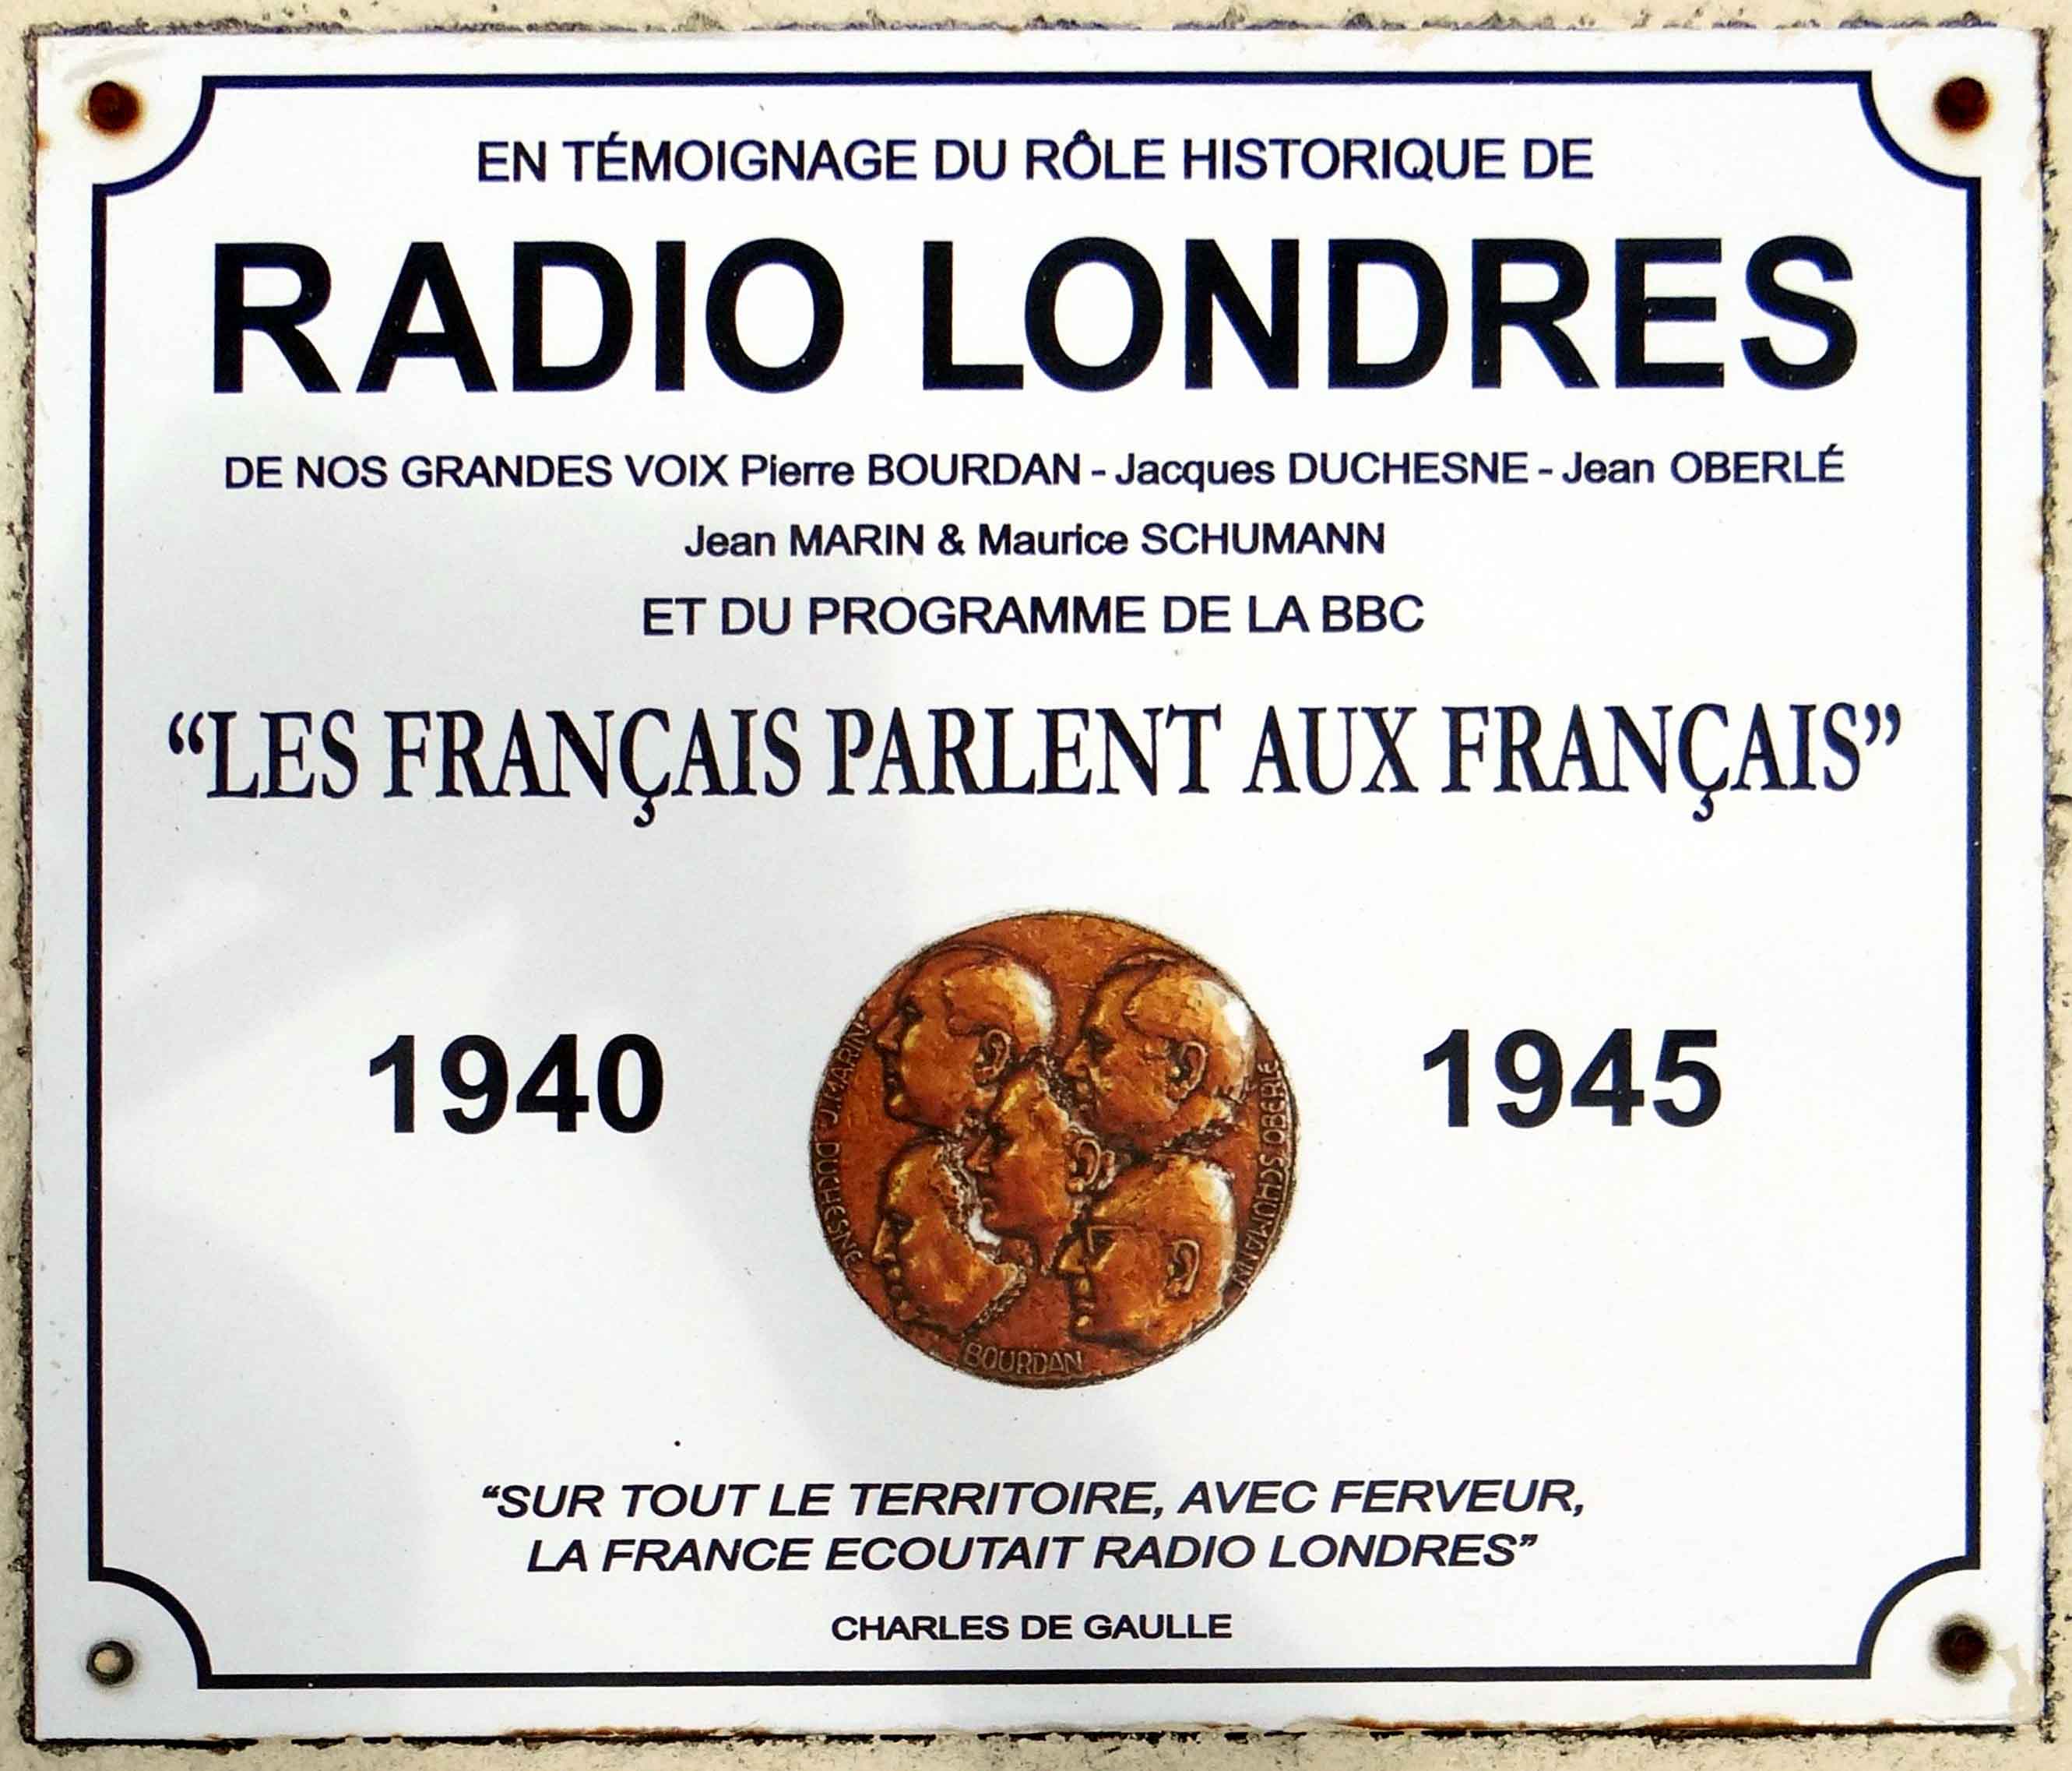 Plaque commemorating Radio-Londres. Photo by Wayne77 (2013). PD-CCA-Share Alike 4.0 International. Wikimedia Commons.